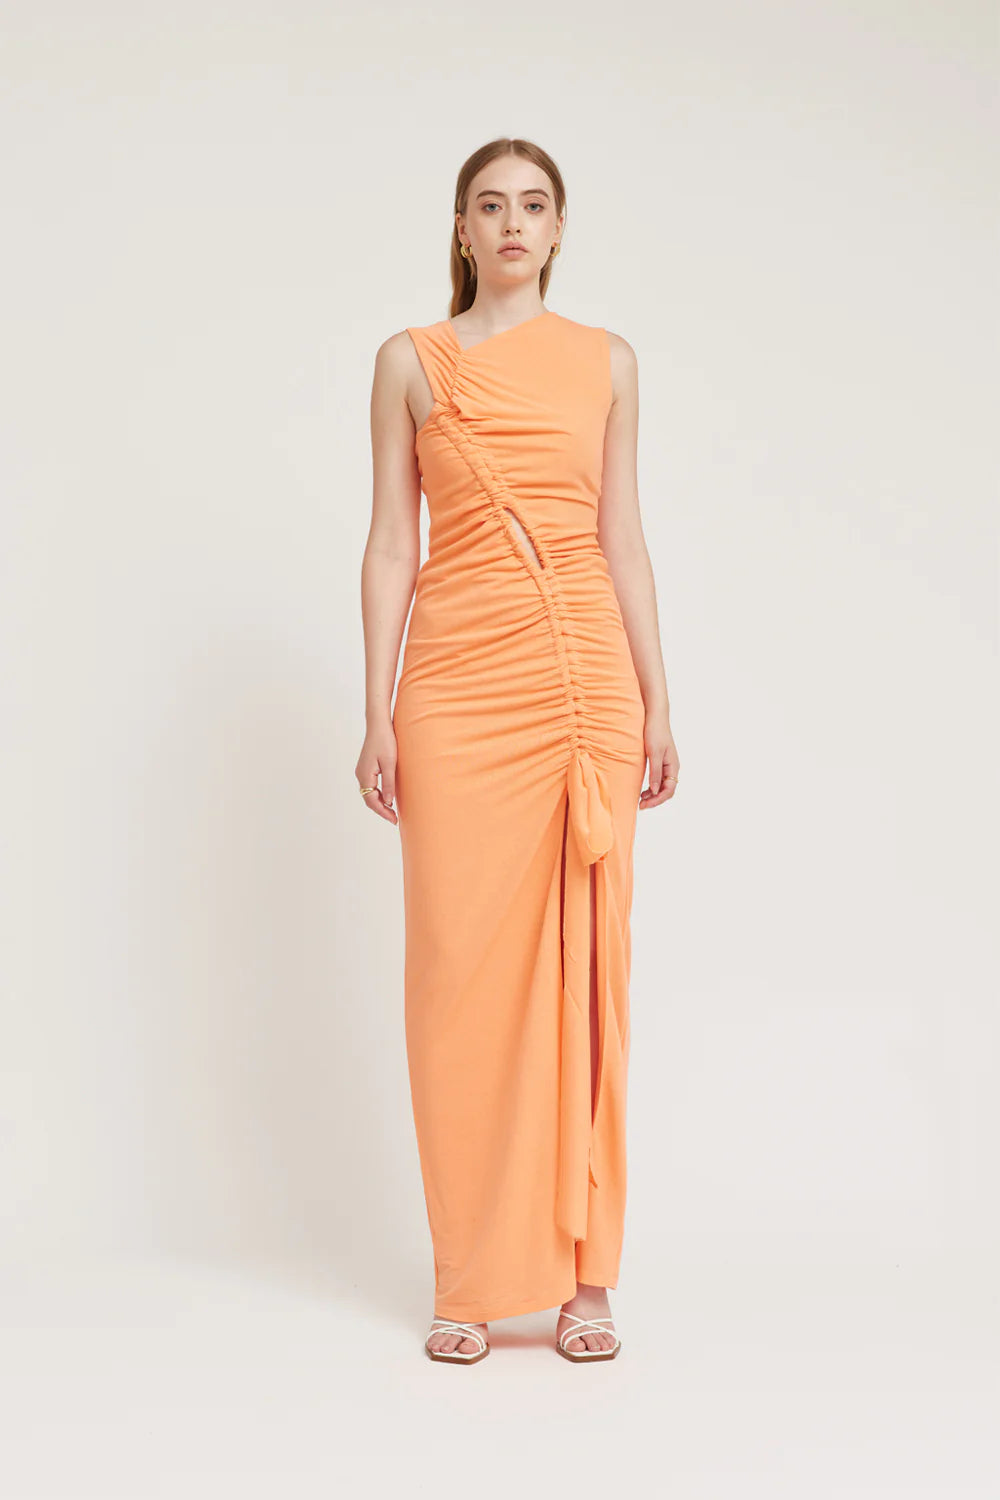 Tojha - Lita Dress - Coral